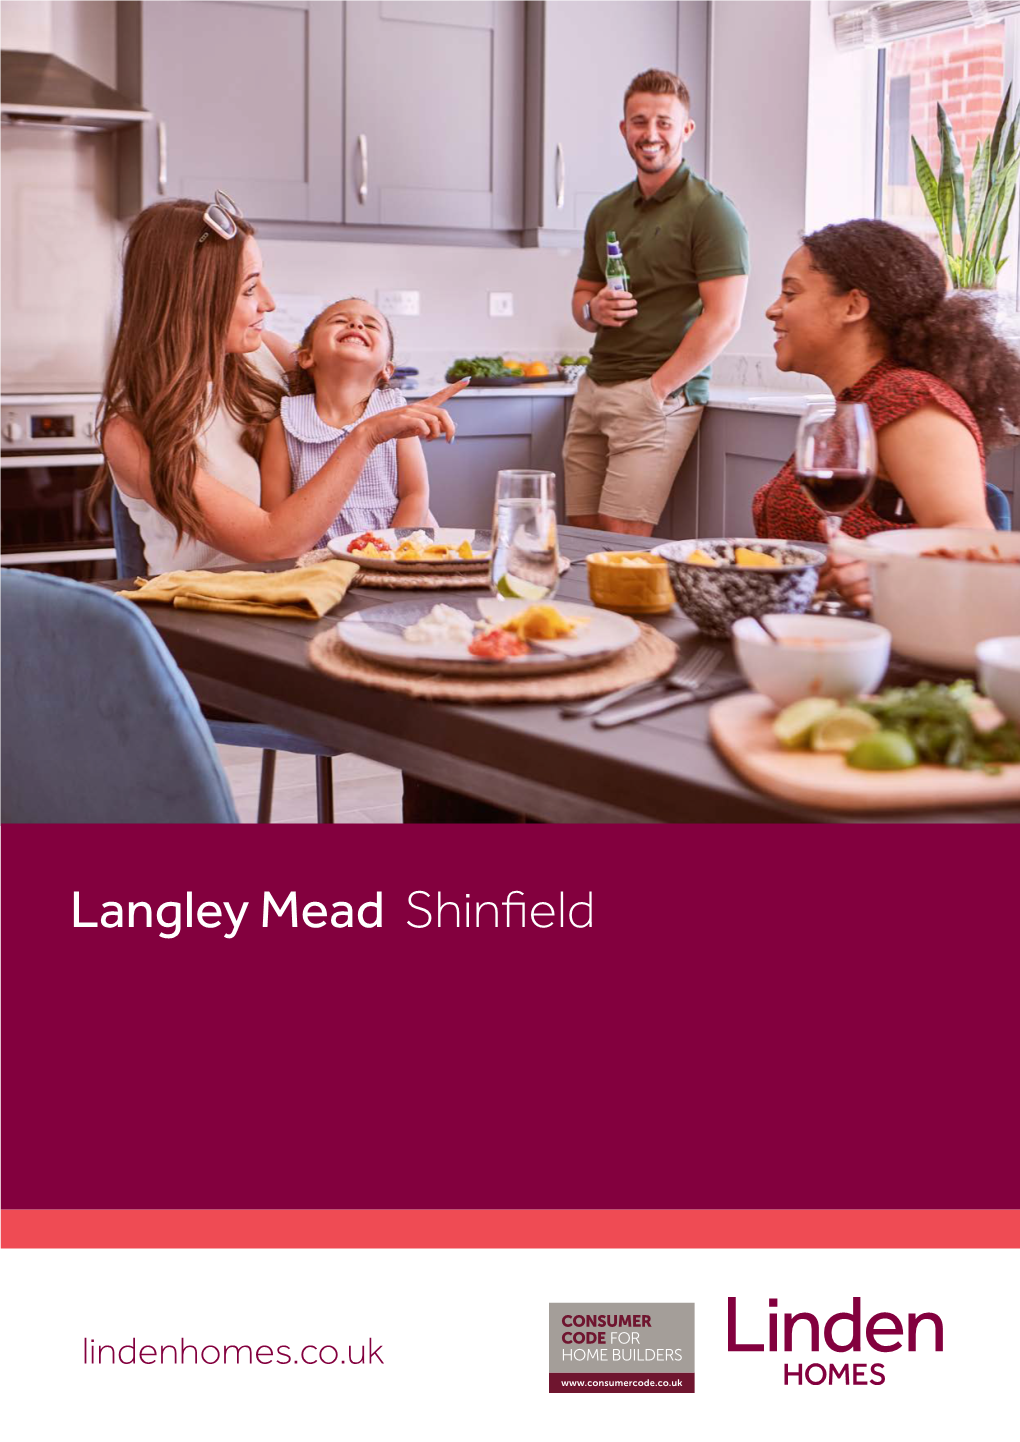 Langley Mead Shinfield